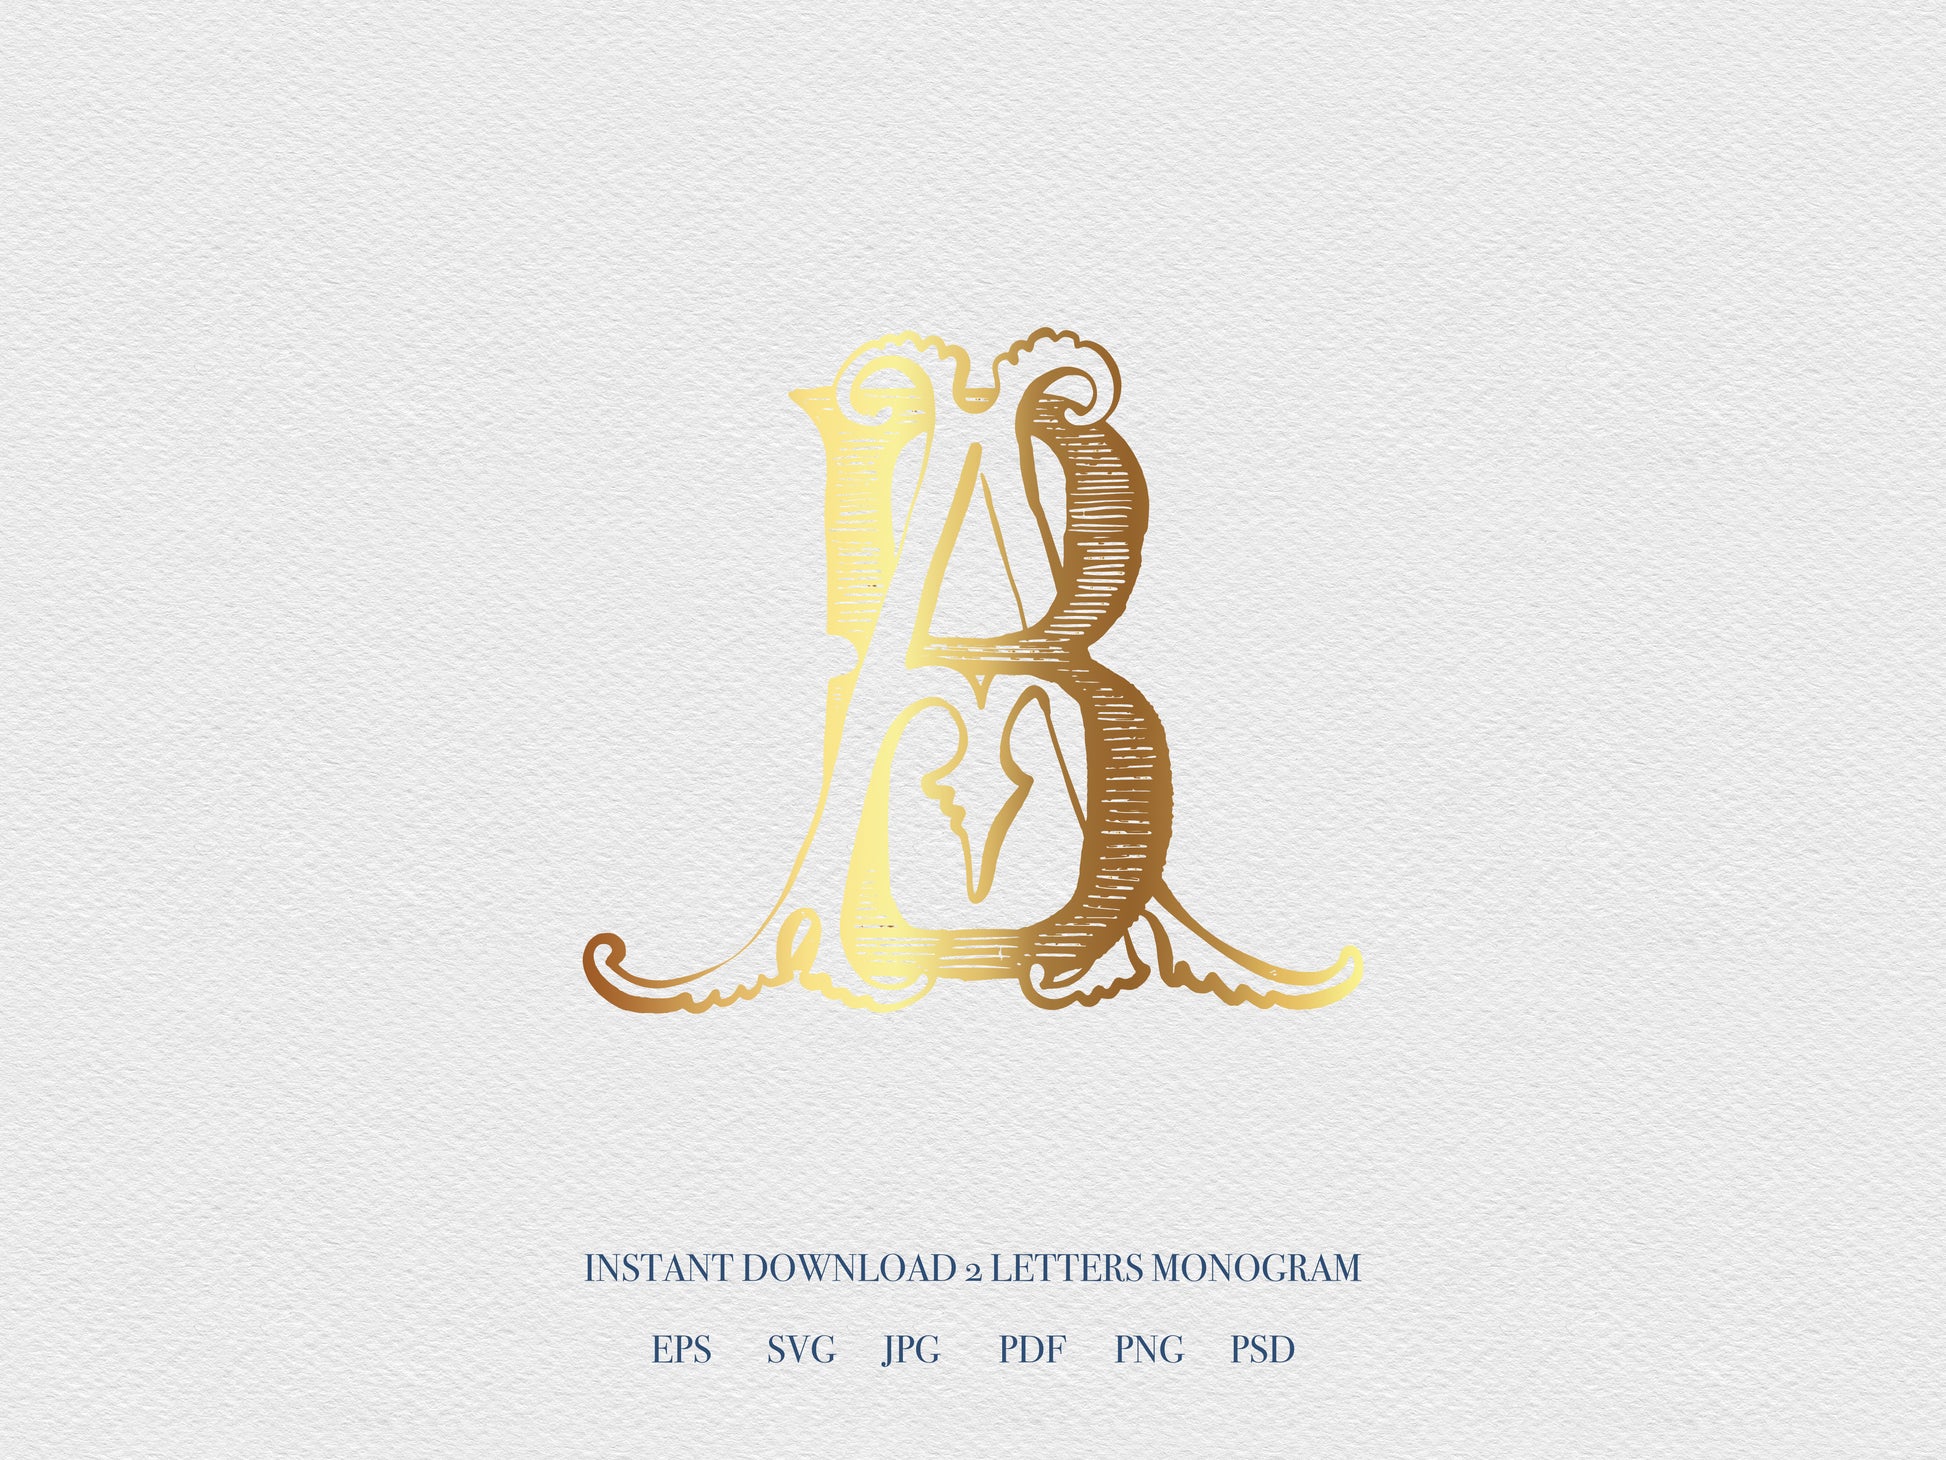 2 Letter Monogram with Letters AB | Digital Download - Wedding Monogram SVG, Personal Logo, Wedding Logo for Wedding Invitations The Wedding Crest Lab